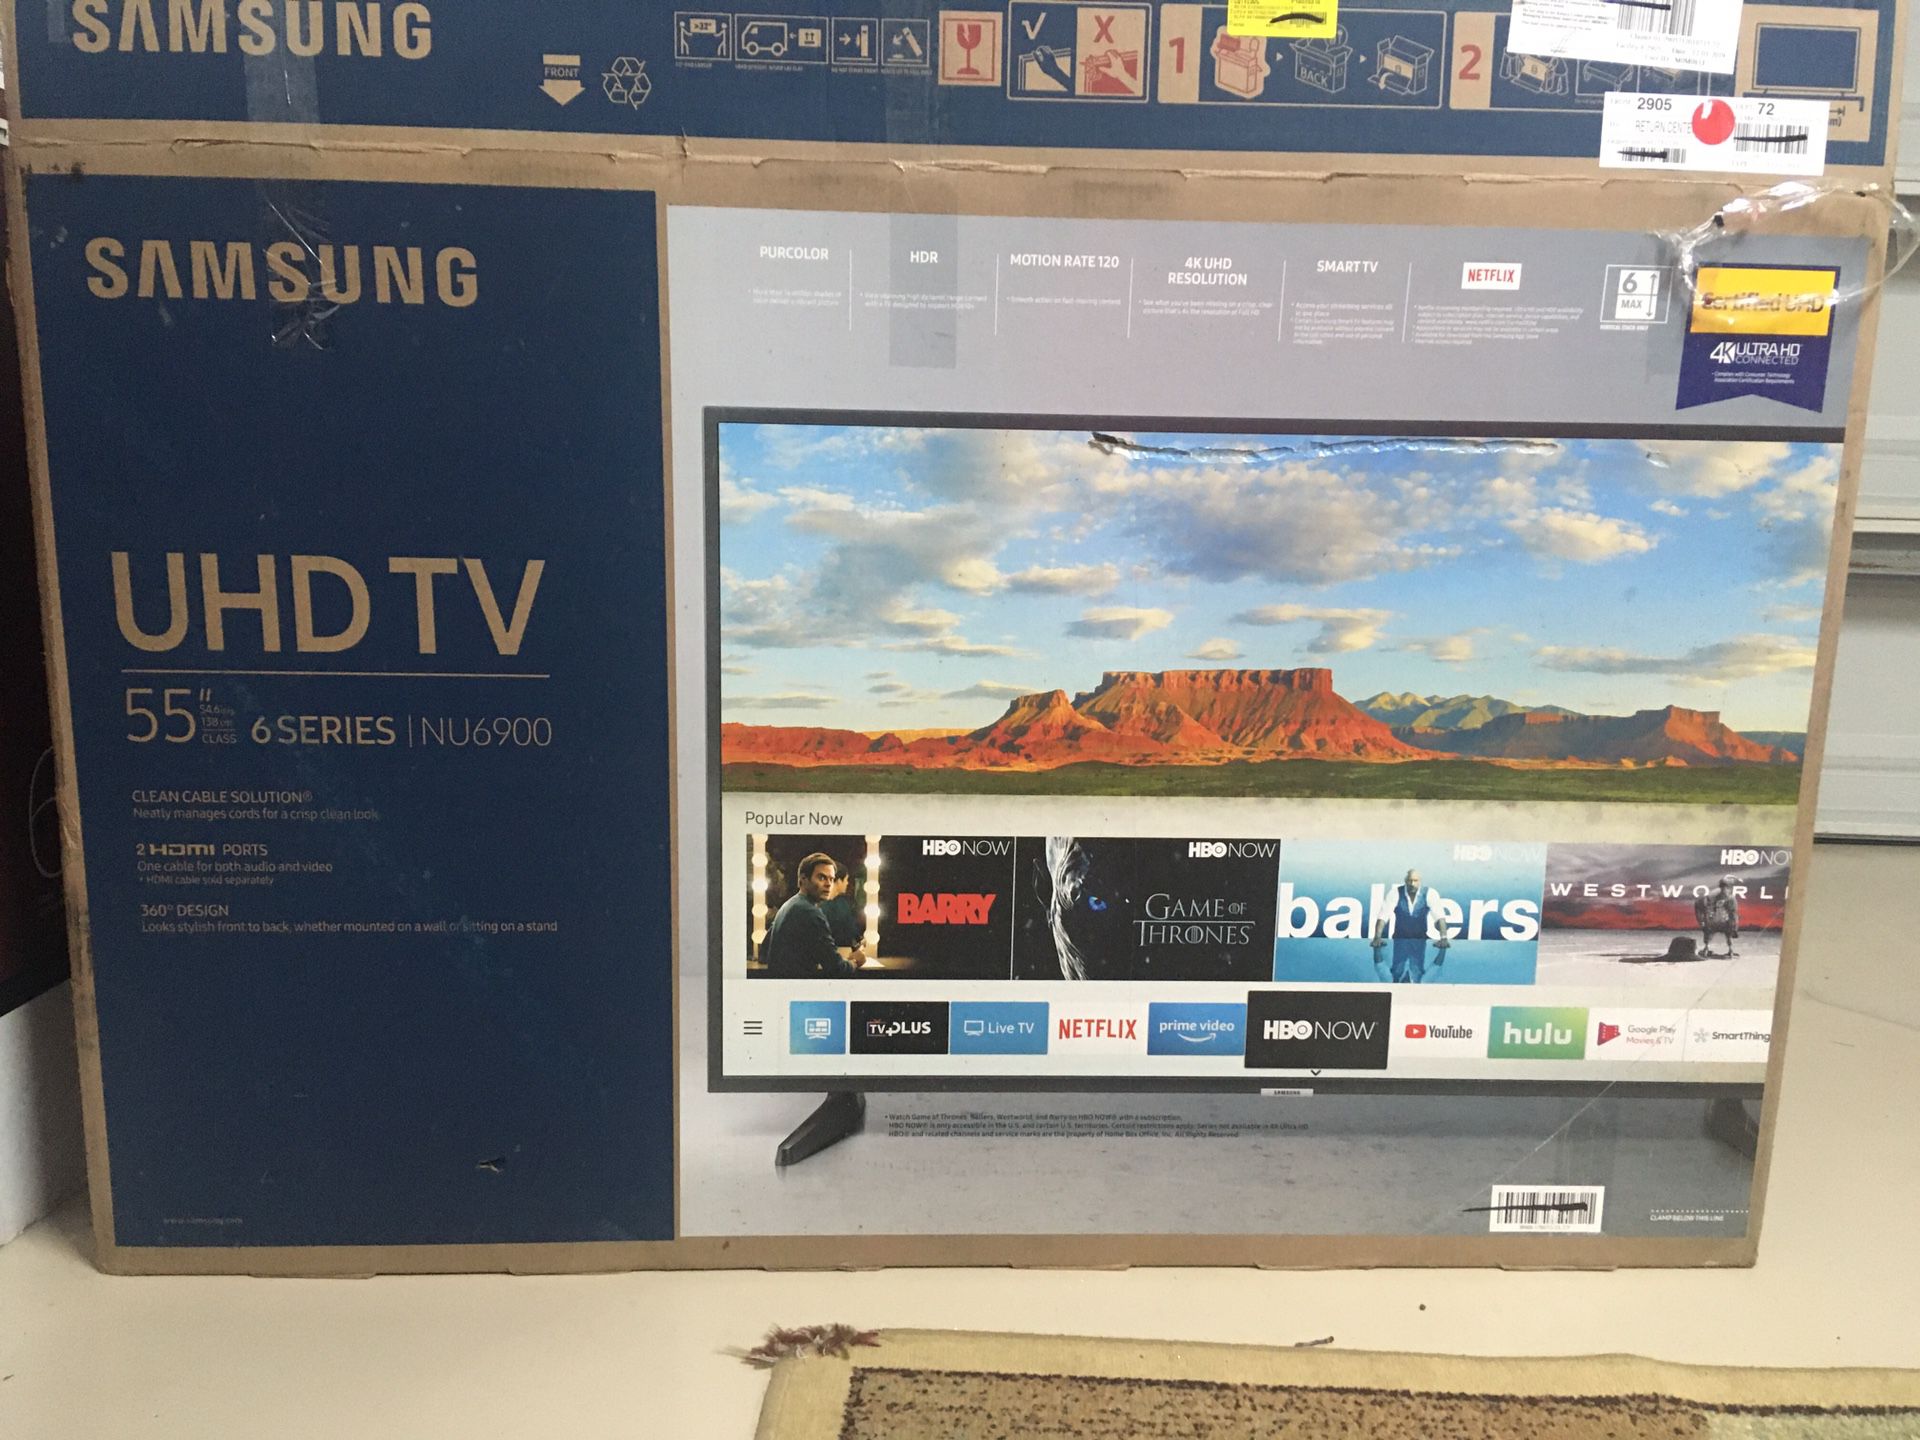 Samsung 55 inch UHD TV 6series